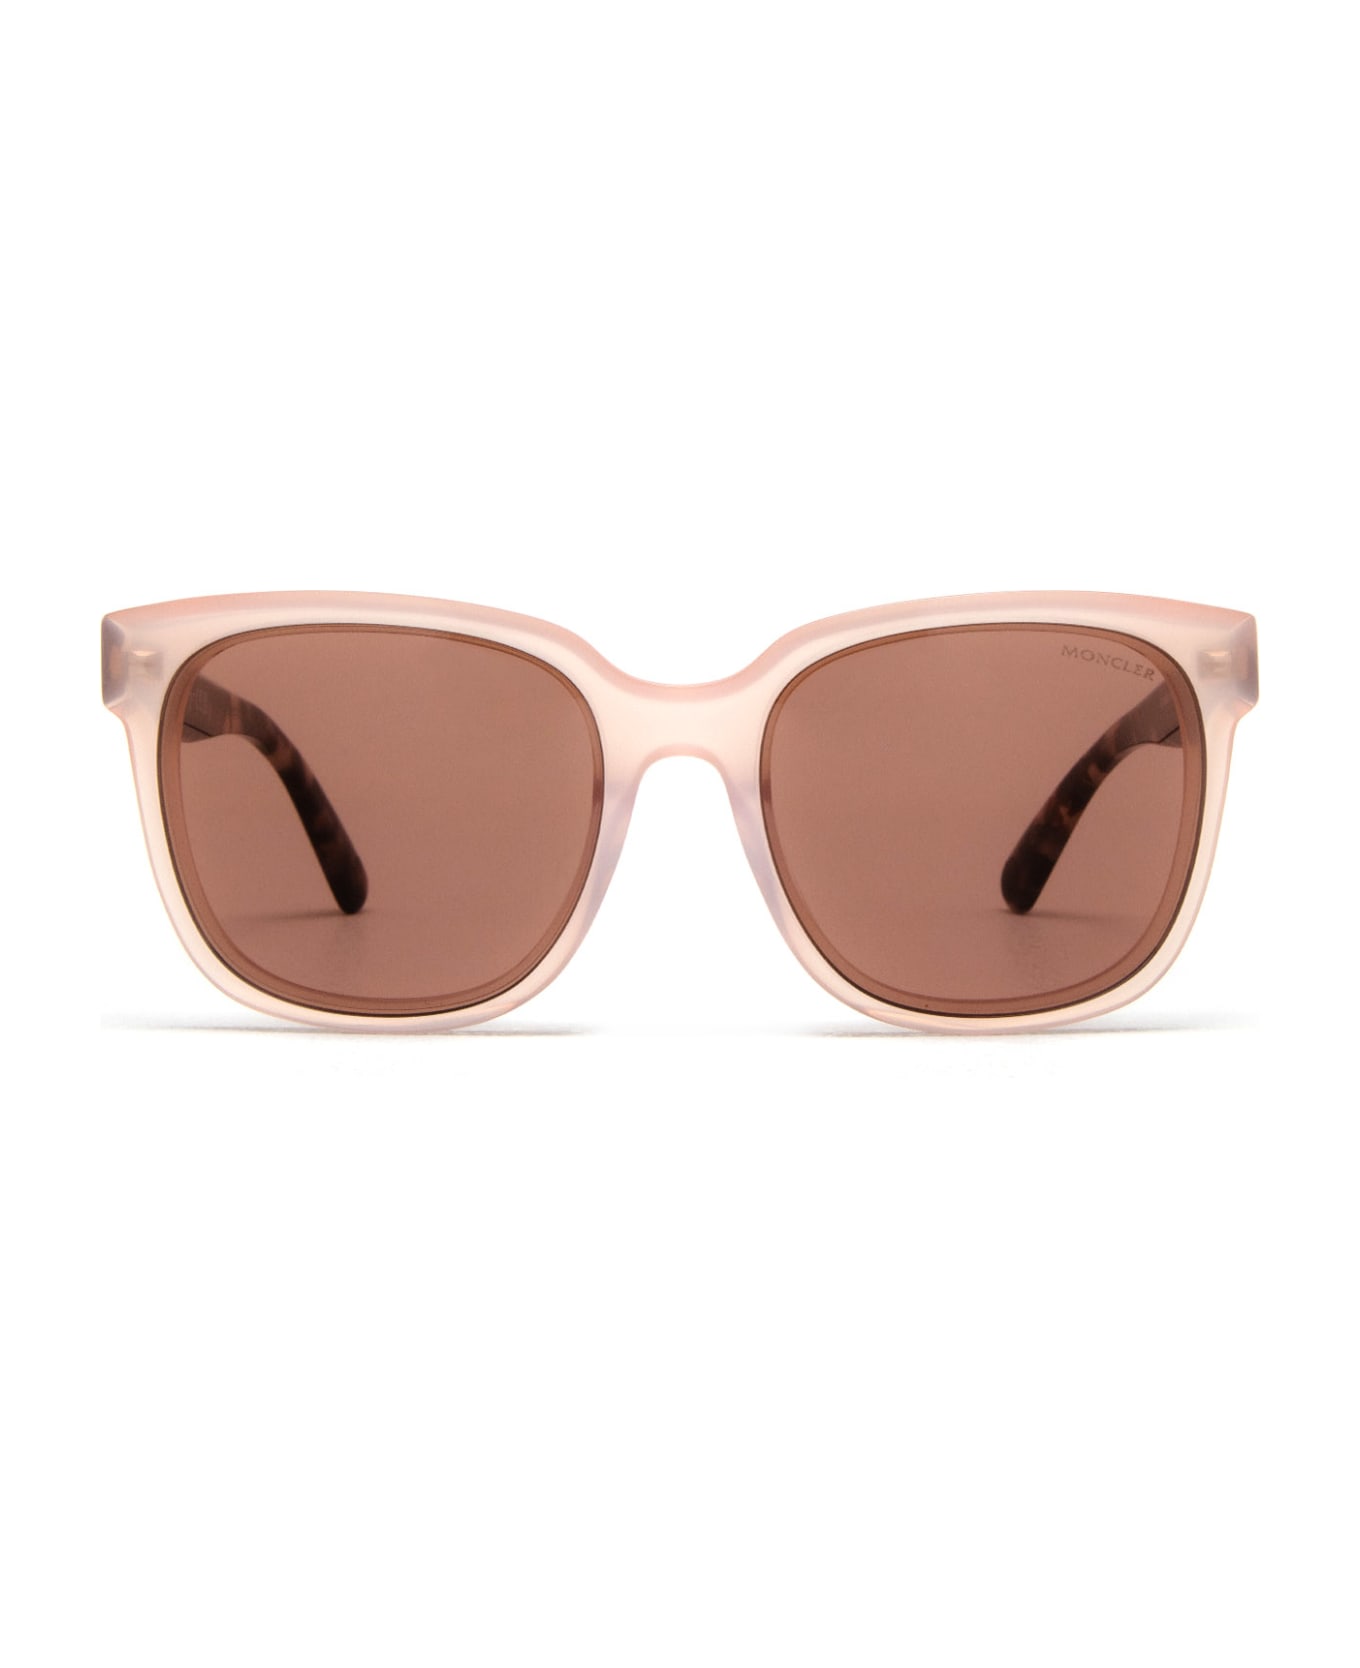 Moncler Eyewear Ml0198 Shiny Pink Sunglasses - Shiny Pink サングラス